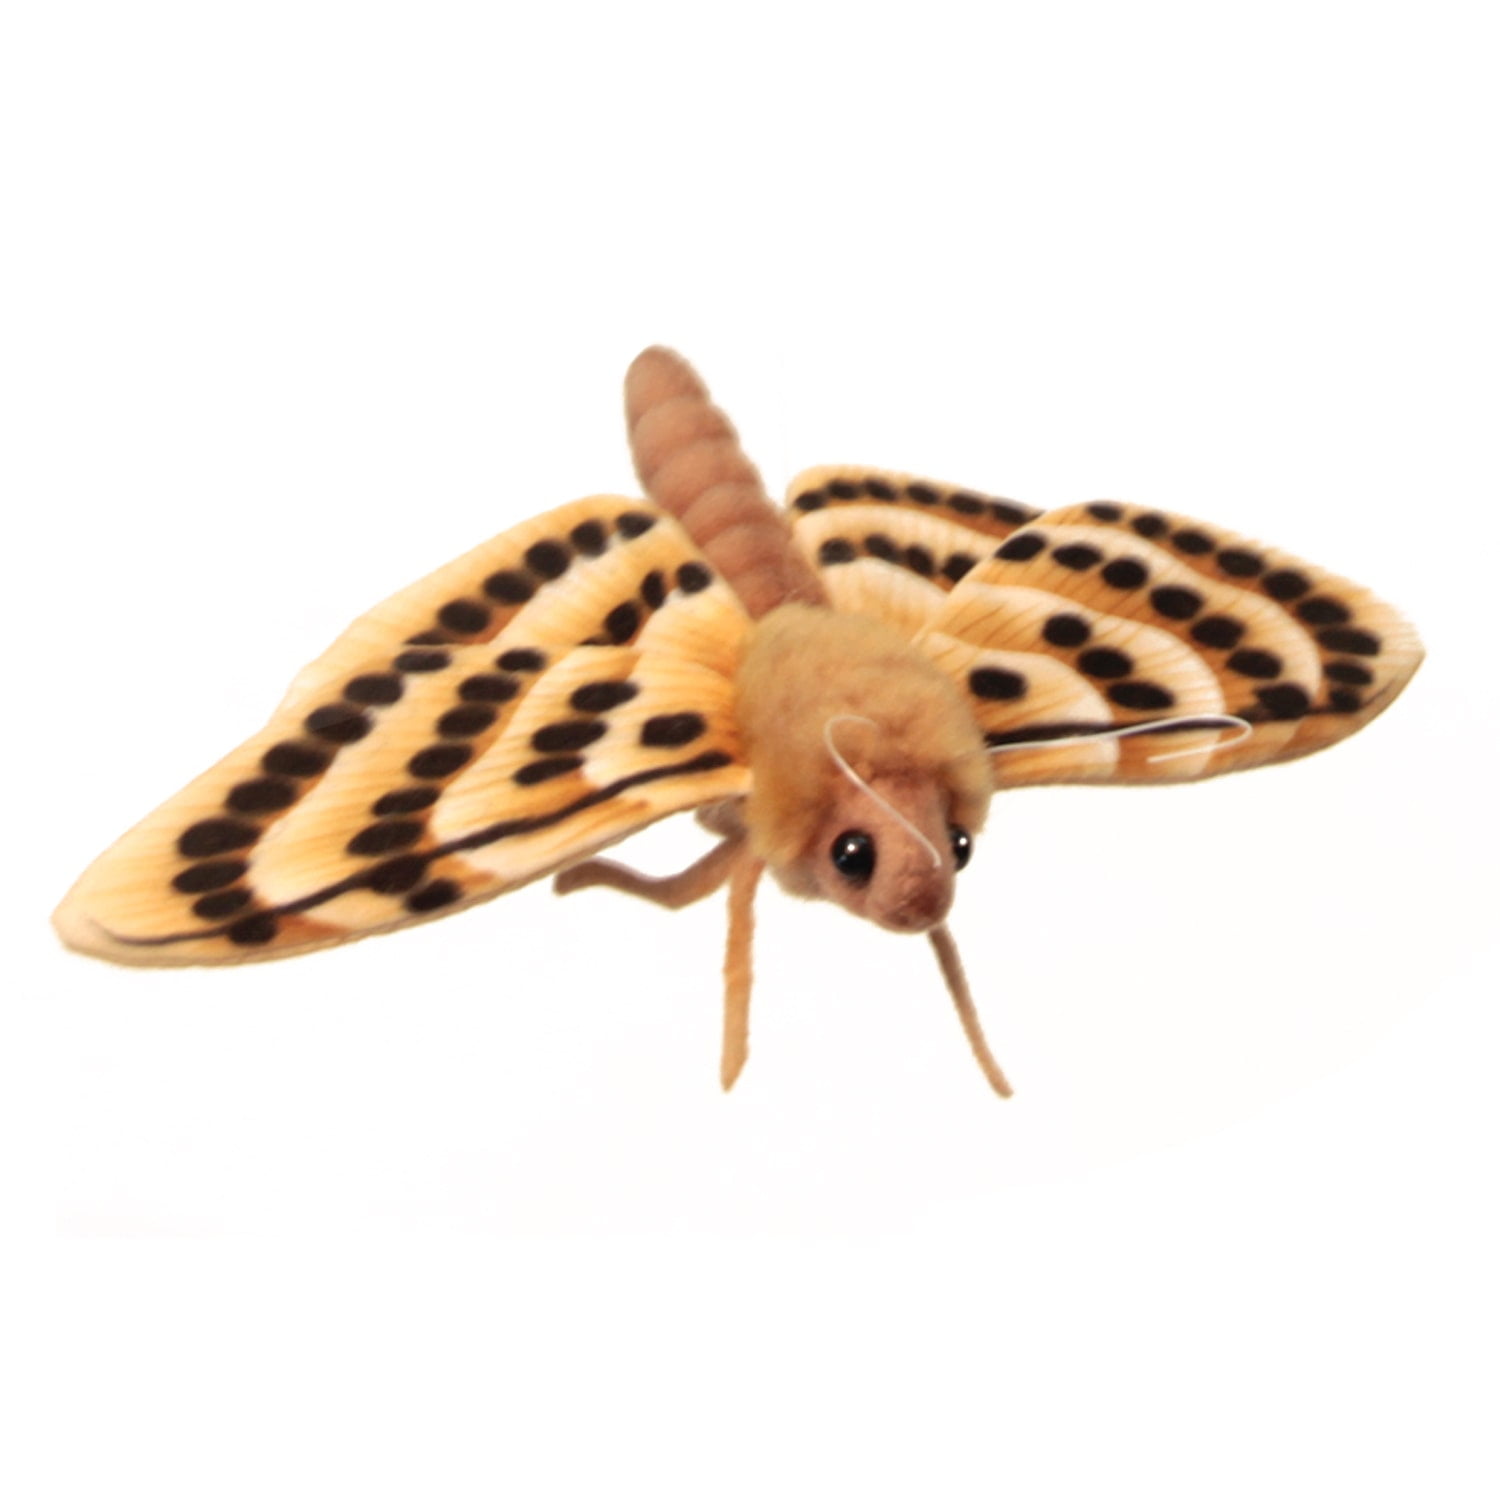 moth stuffed animal